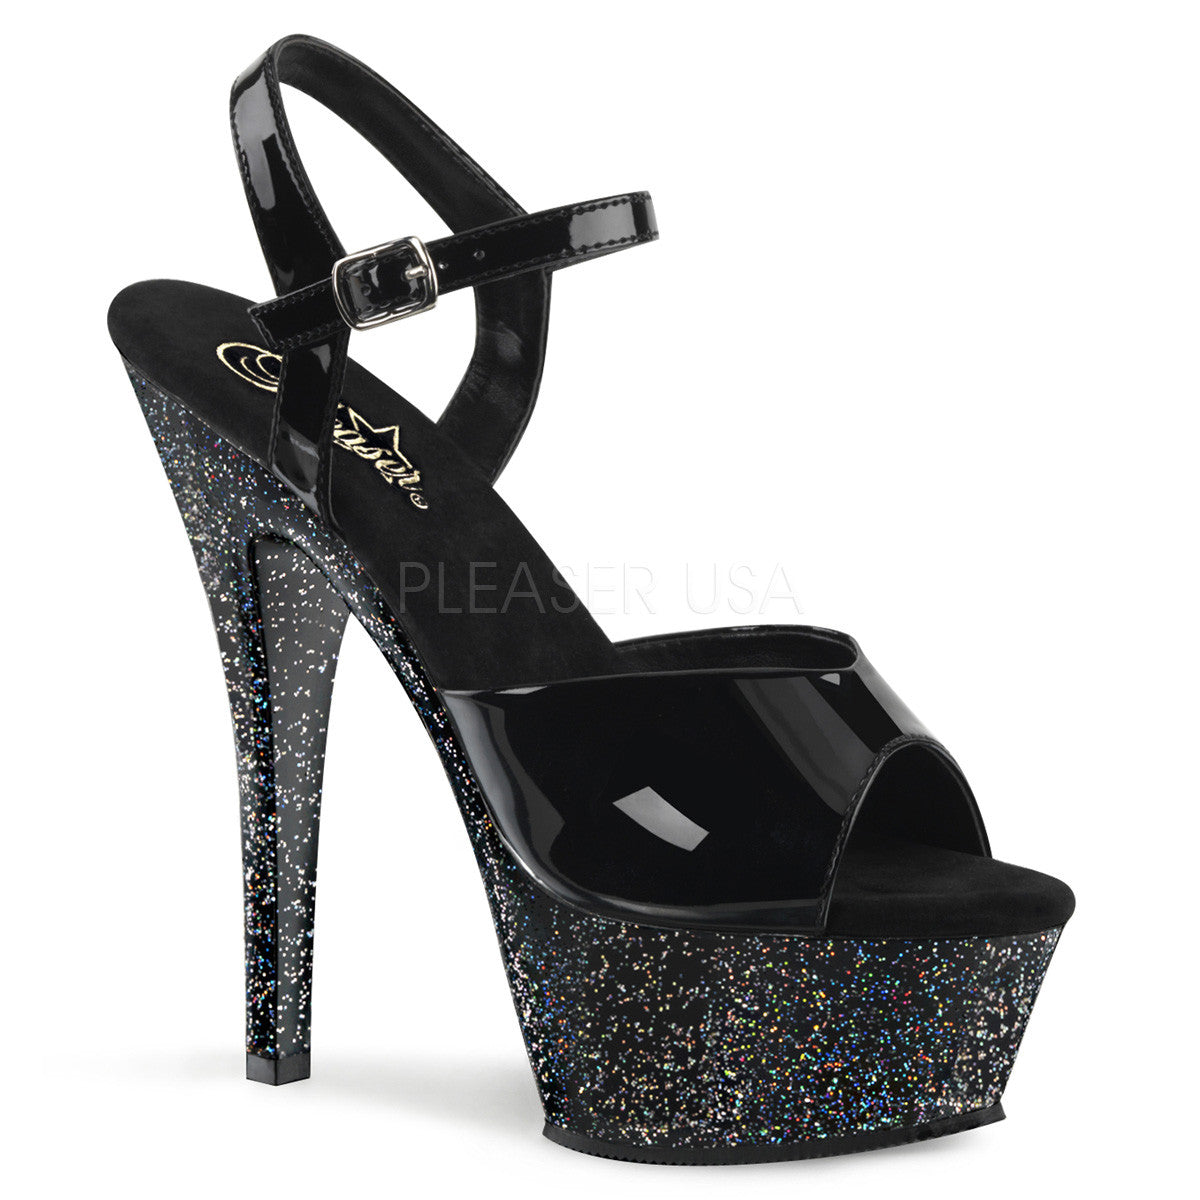 Pleaser KISS-209MG Black Ankle Strap Sandals - Shoecup.com